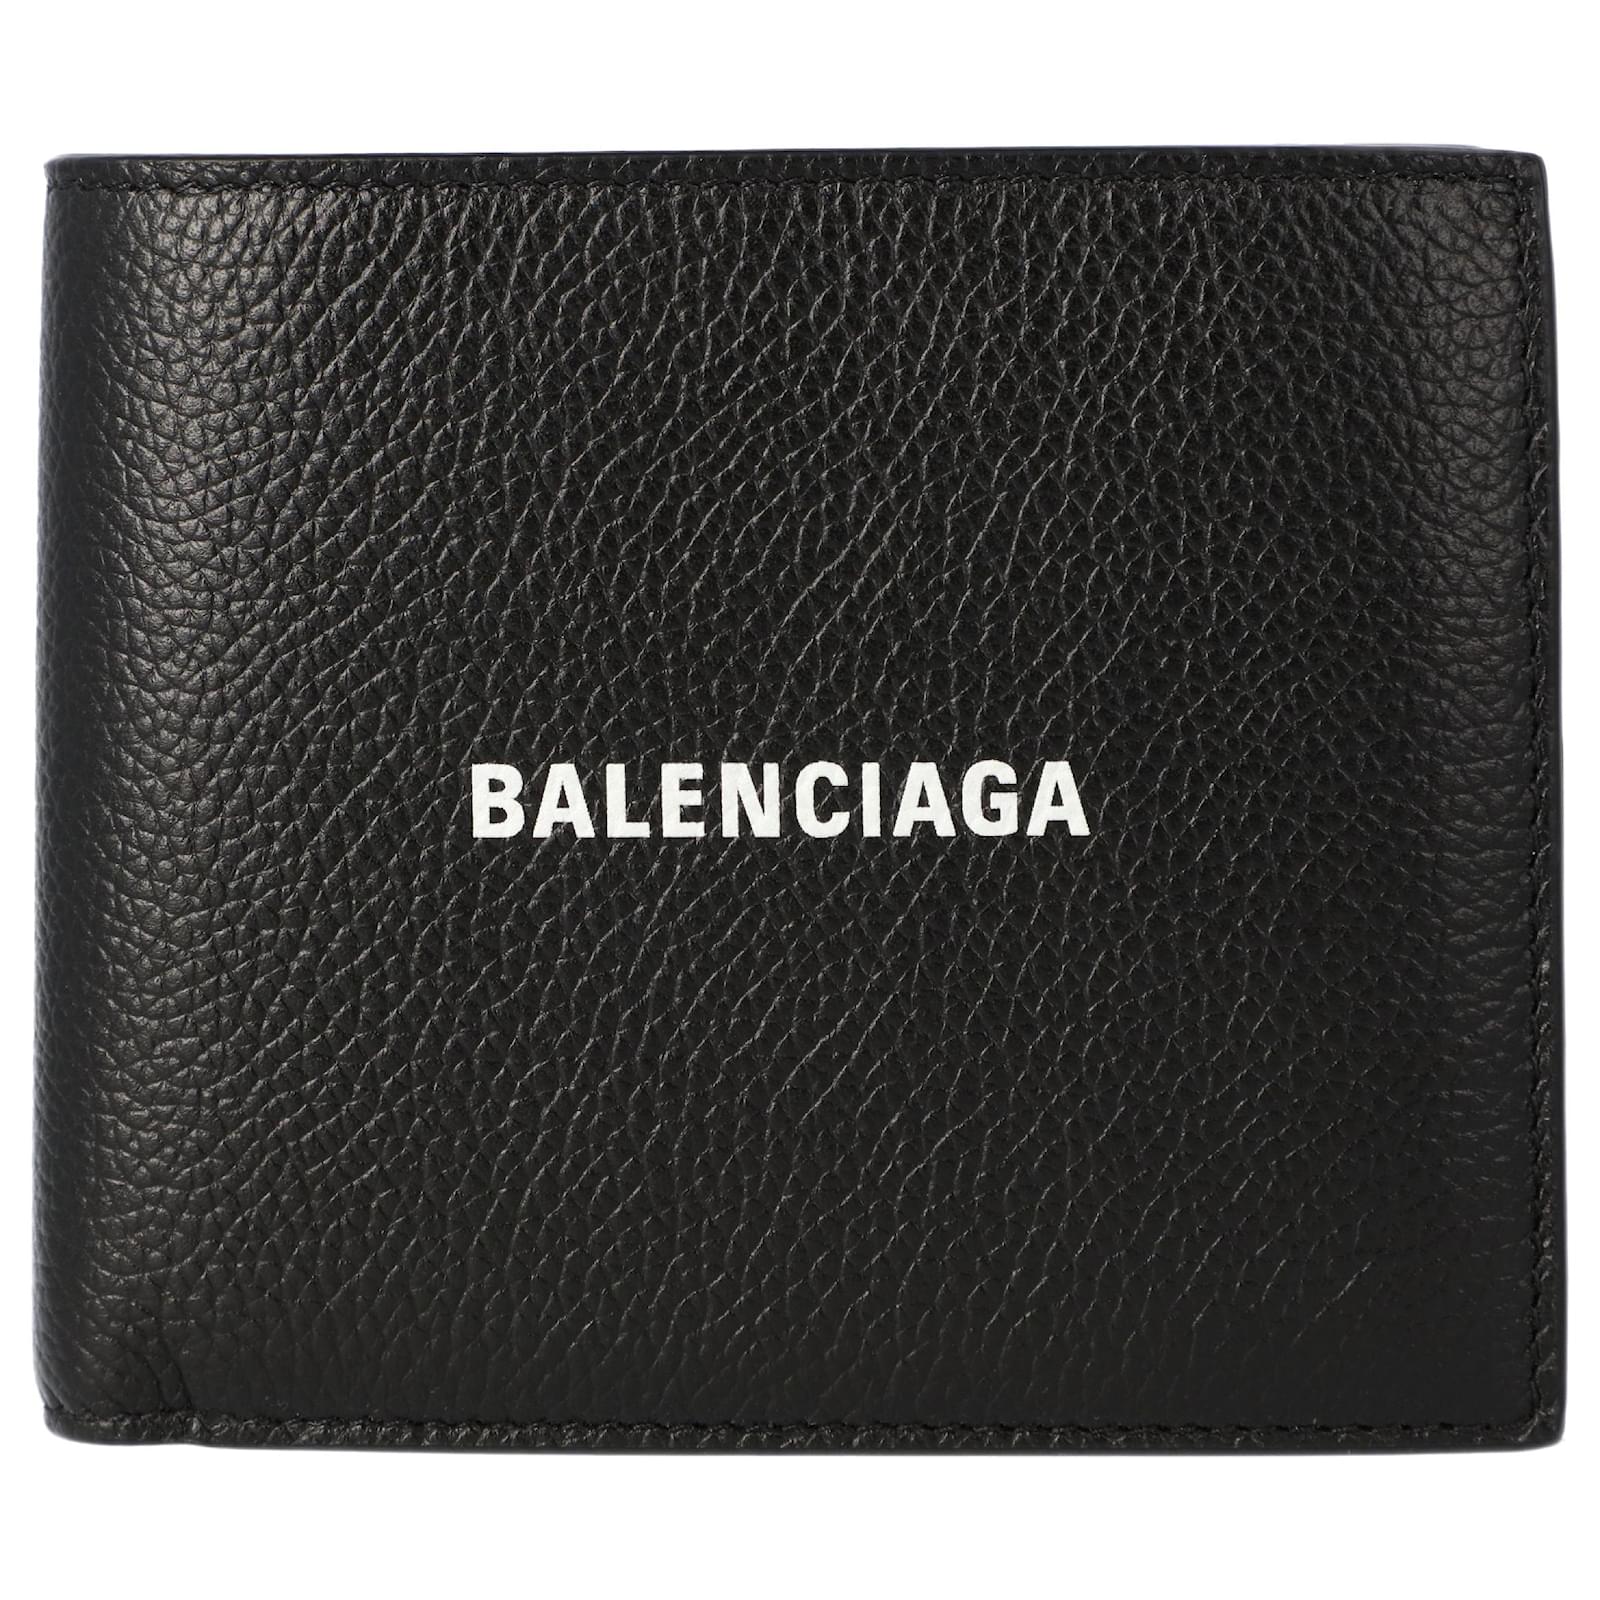 Balenciaga Cash square folded wallet in black with white logo Pony ...